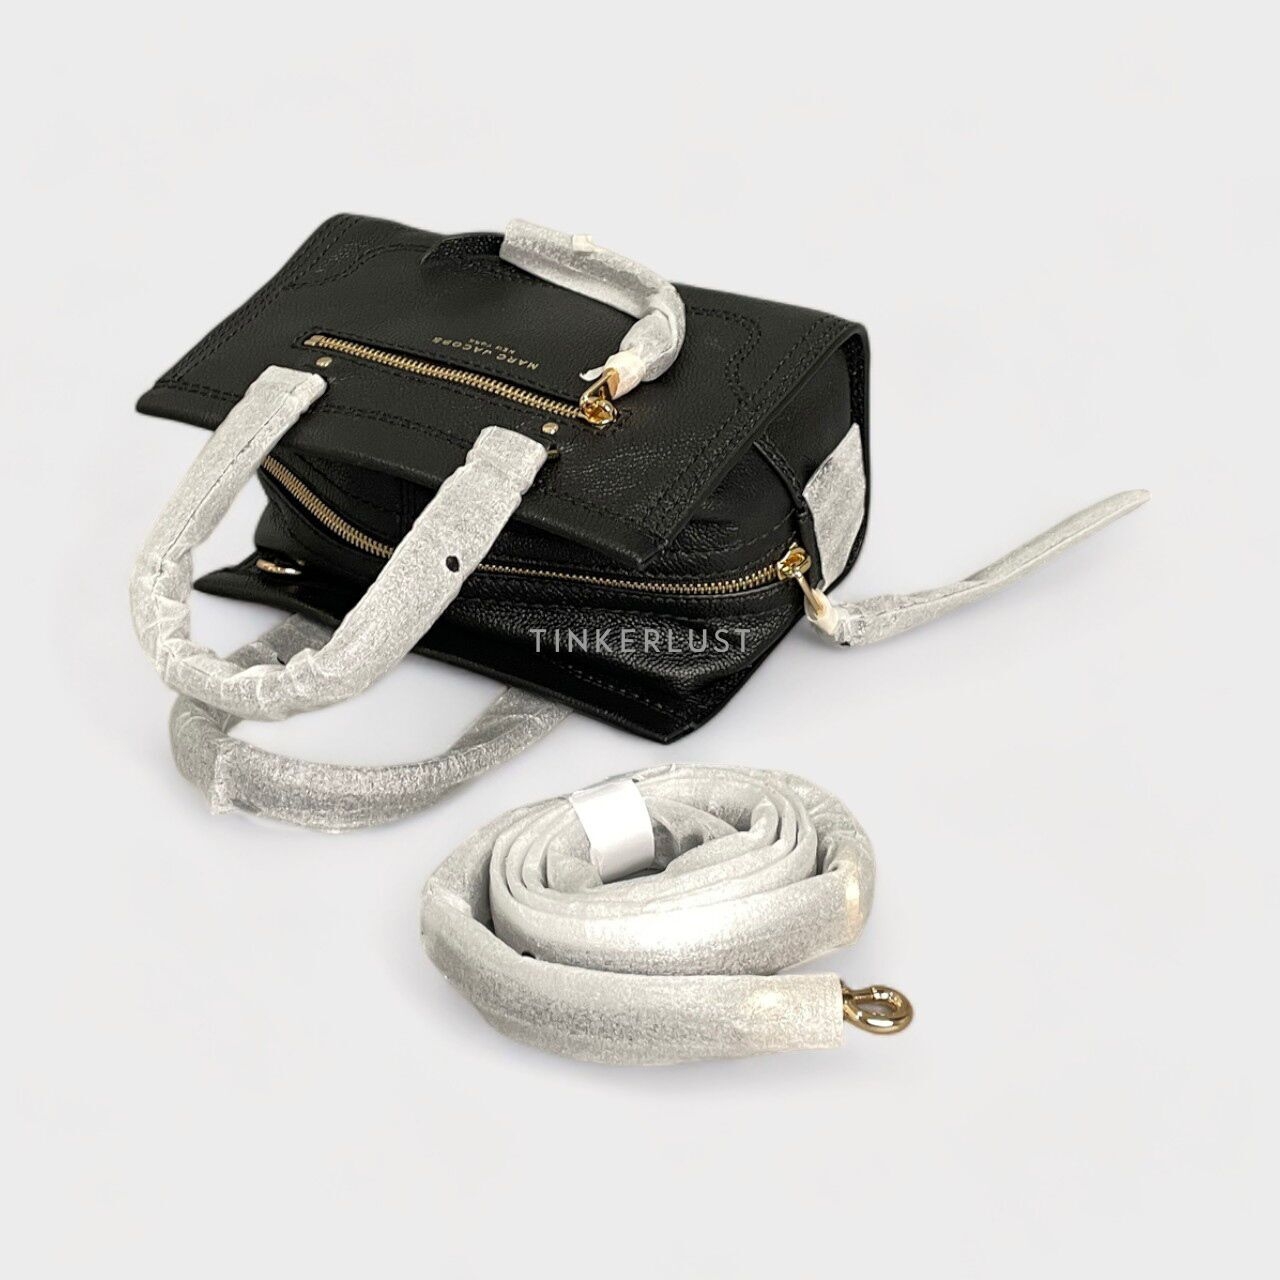 Marc Jacobs M0015022 Mini Cruiser Black Leather Satchel